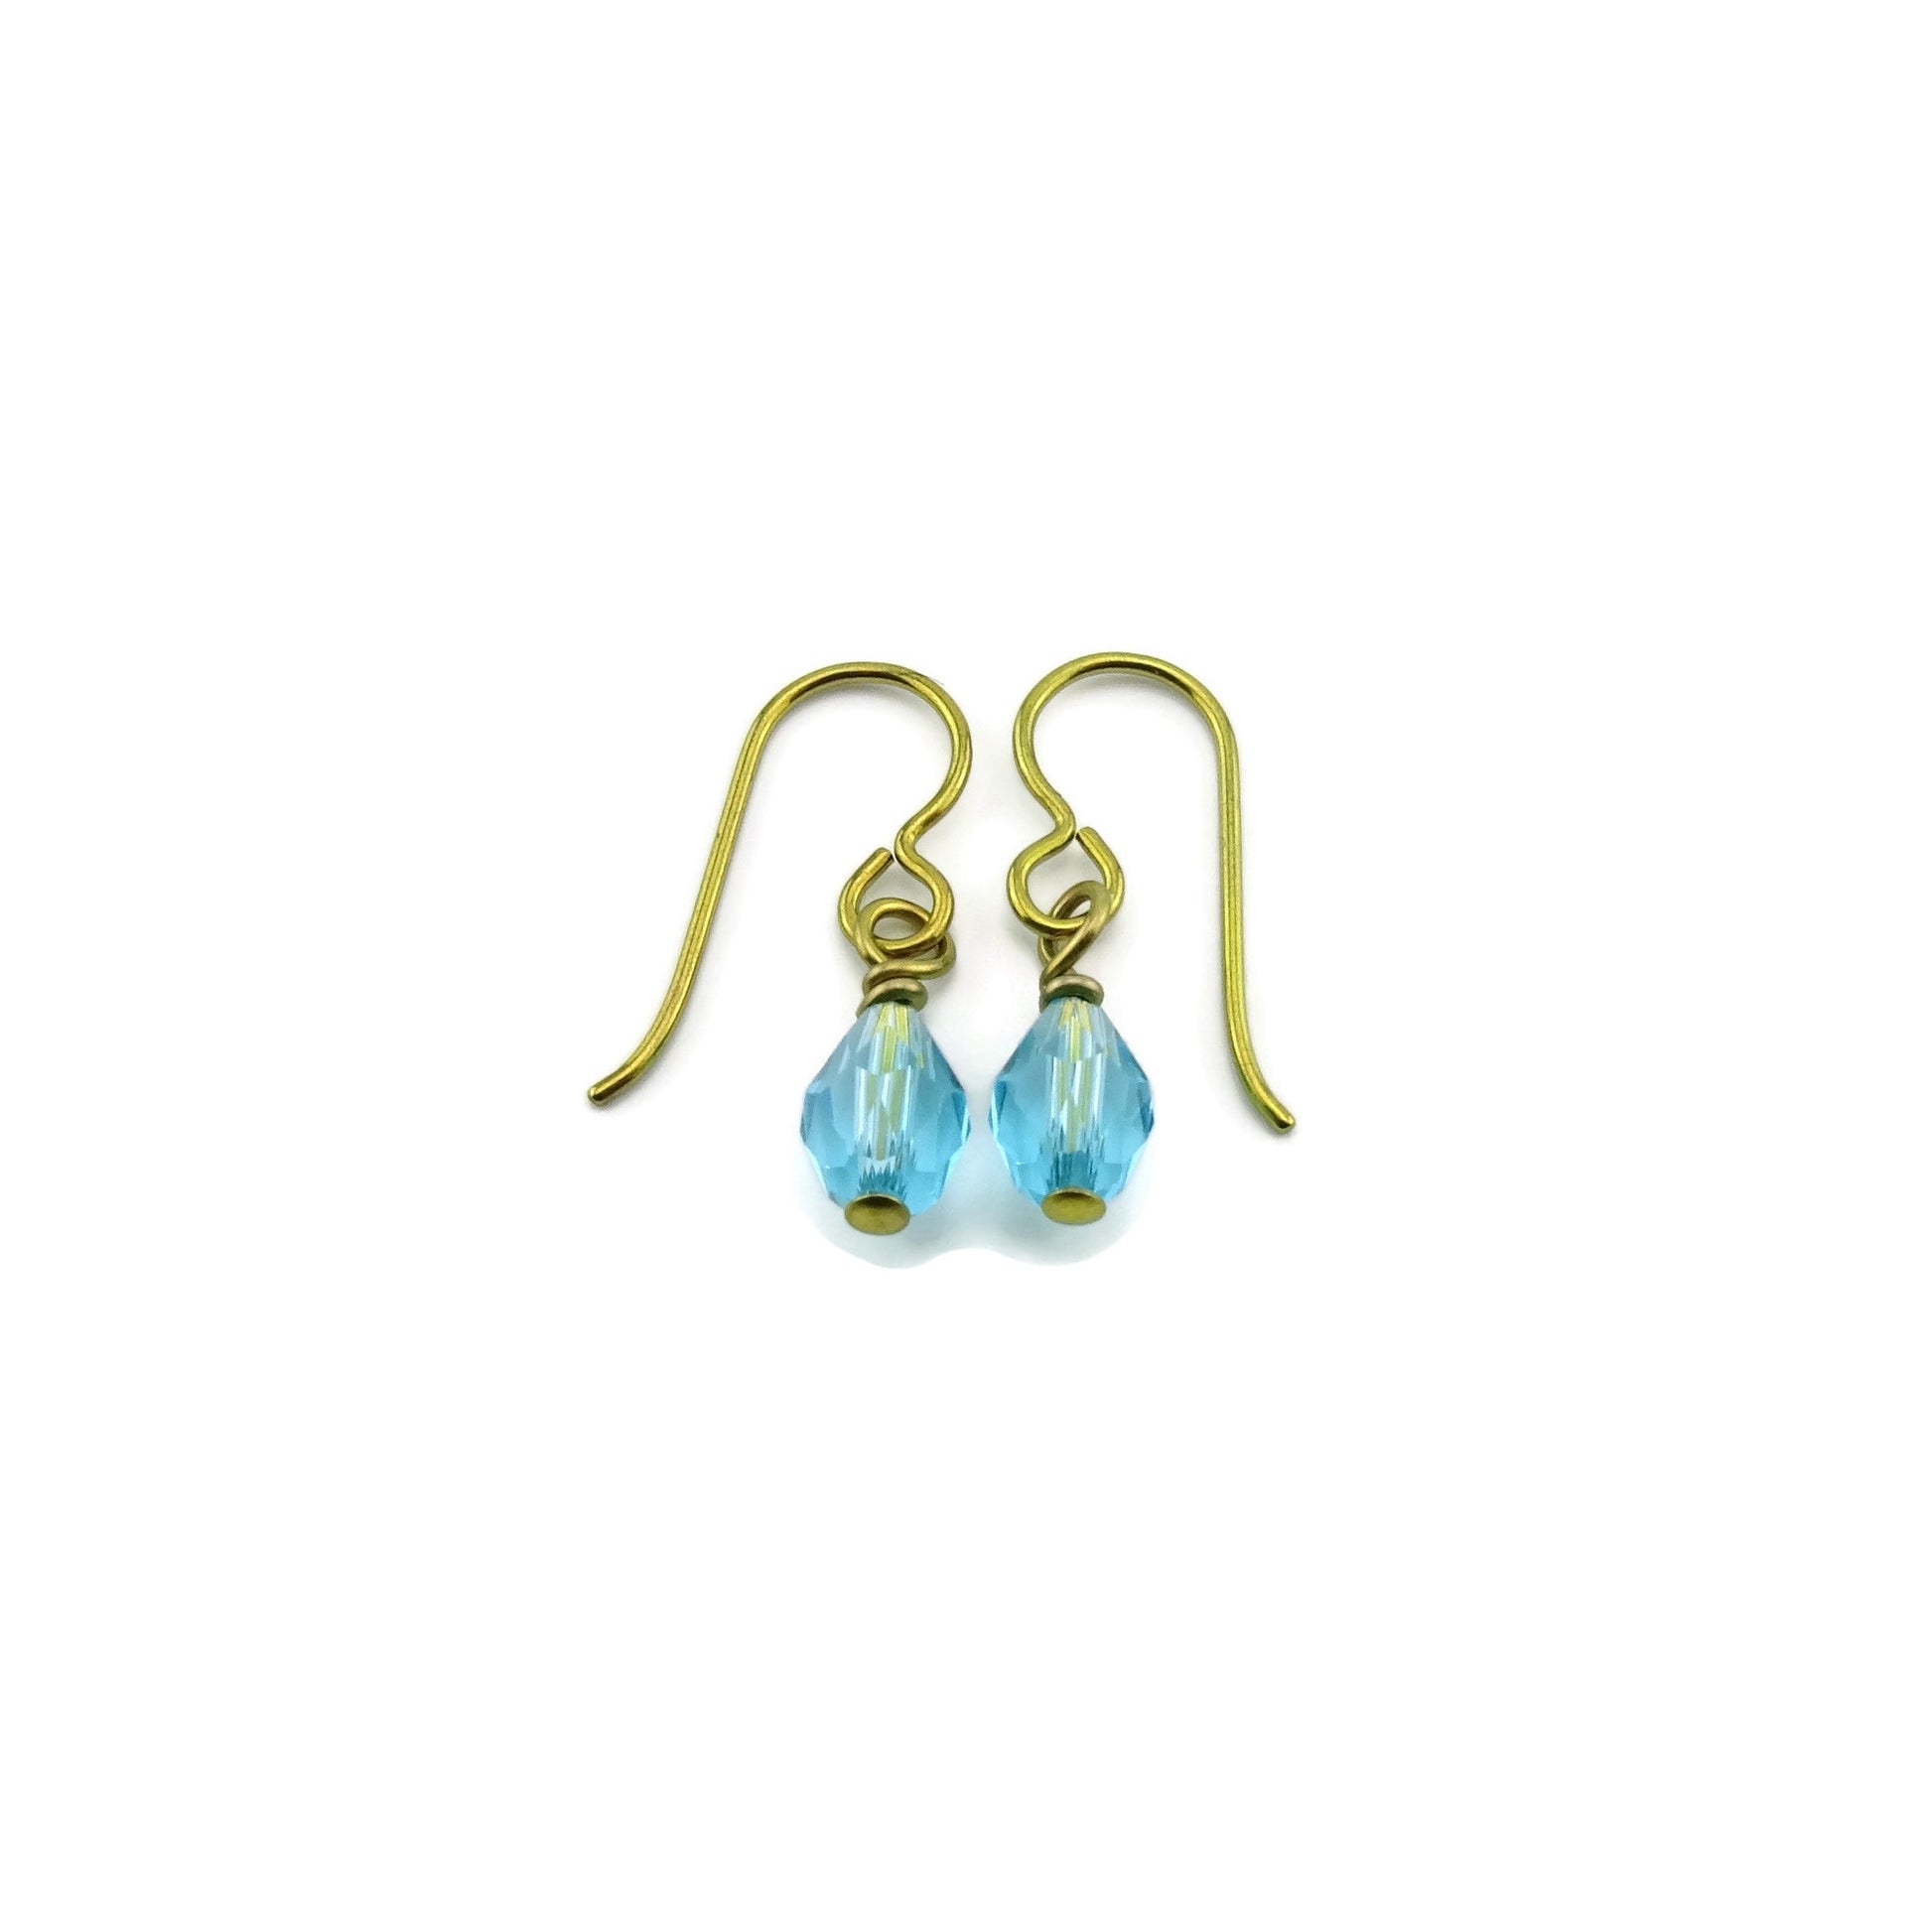 Light Turquoise Crystal Teardrop Gold Niobium Earrings, Aqua Blue Swarovski Drop Earrings for Sensitive Ears, Nickel Free Hypoallergenic